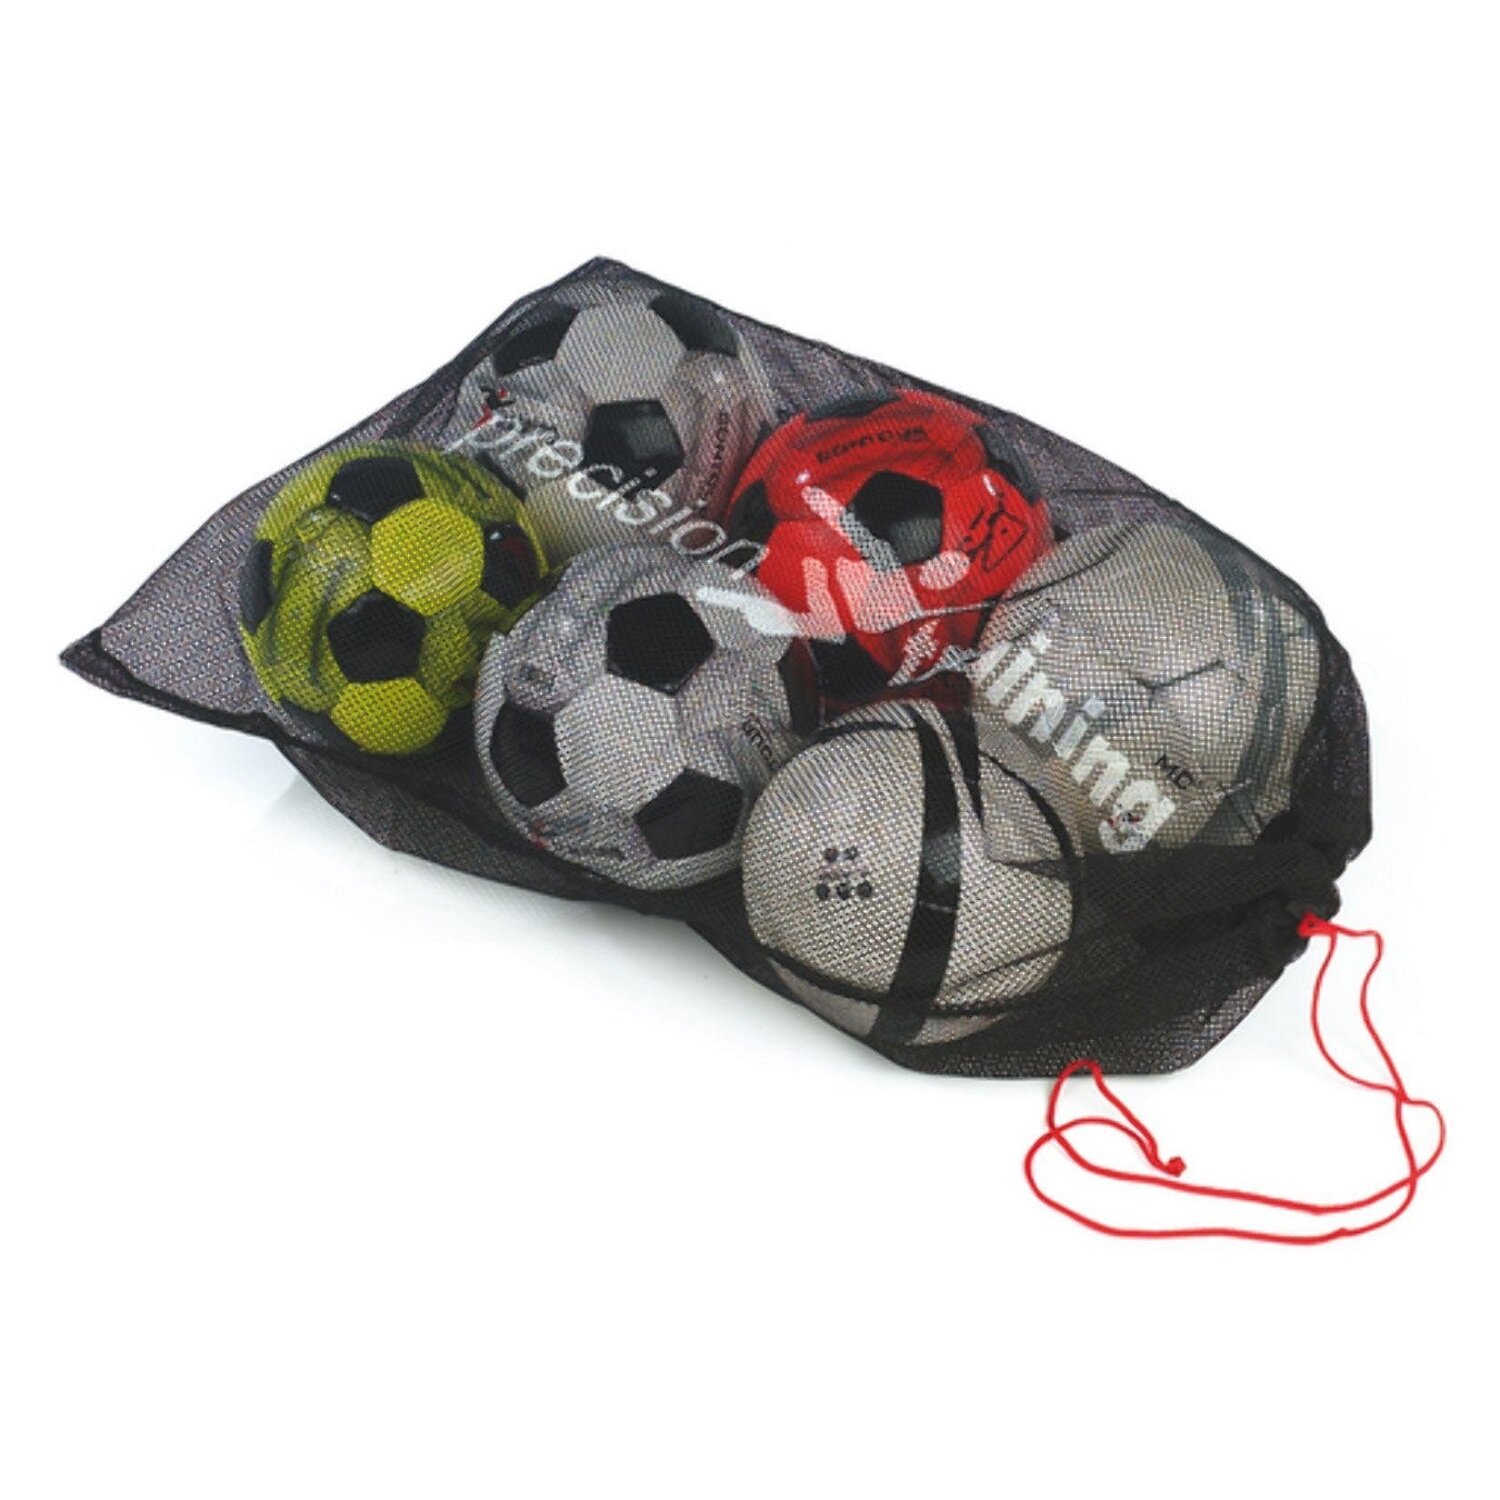 Precision Mesh 10 Ball Football Bag